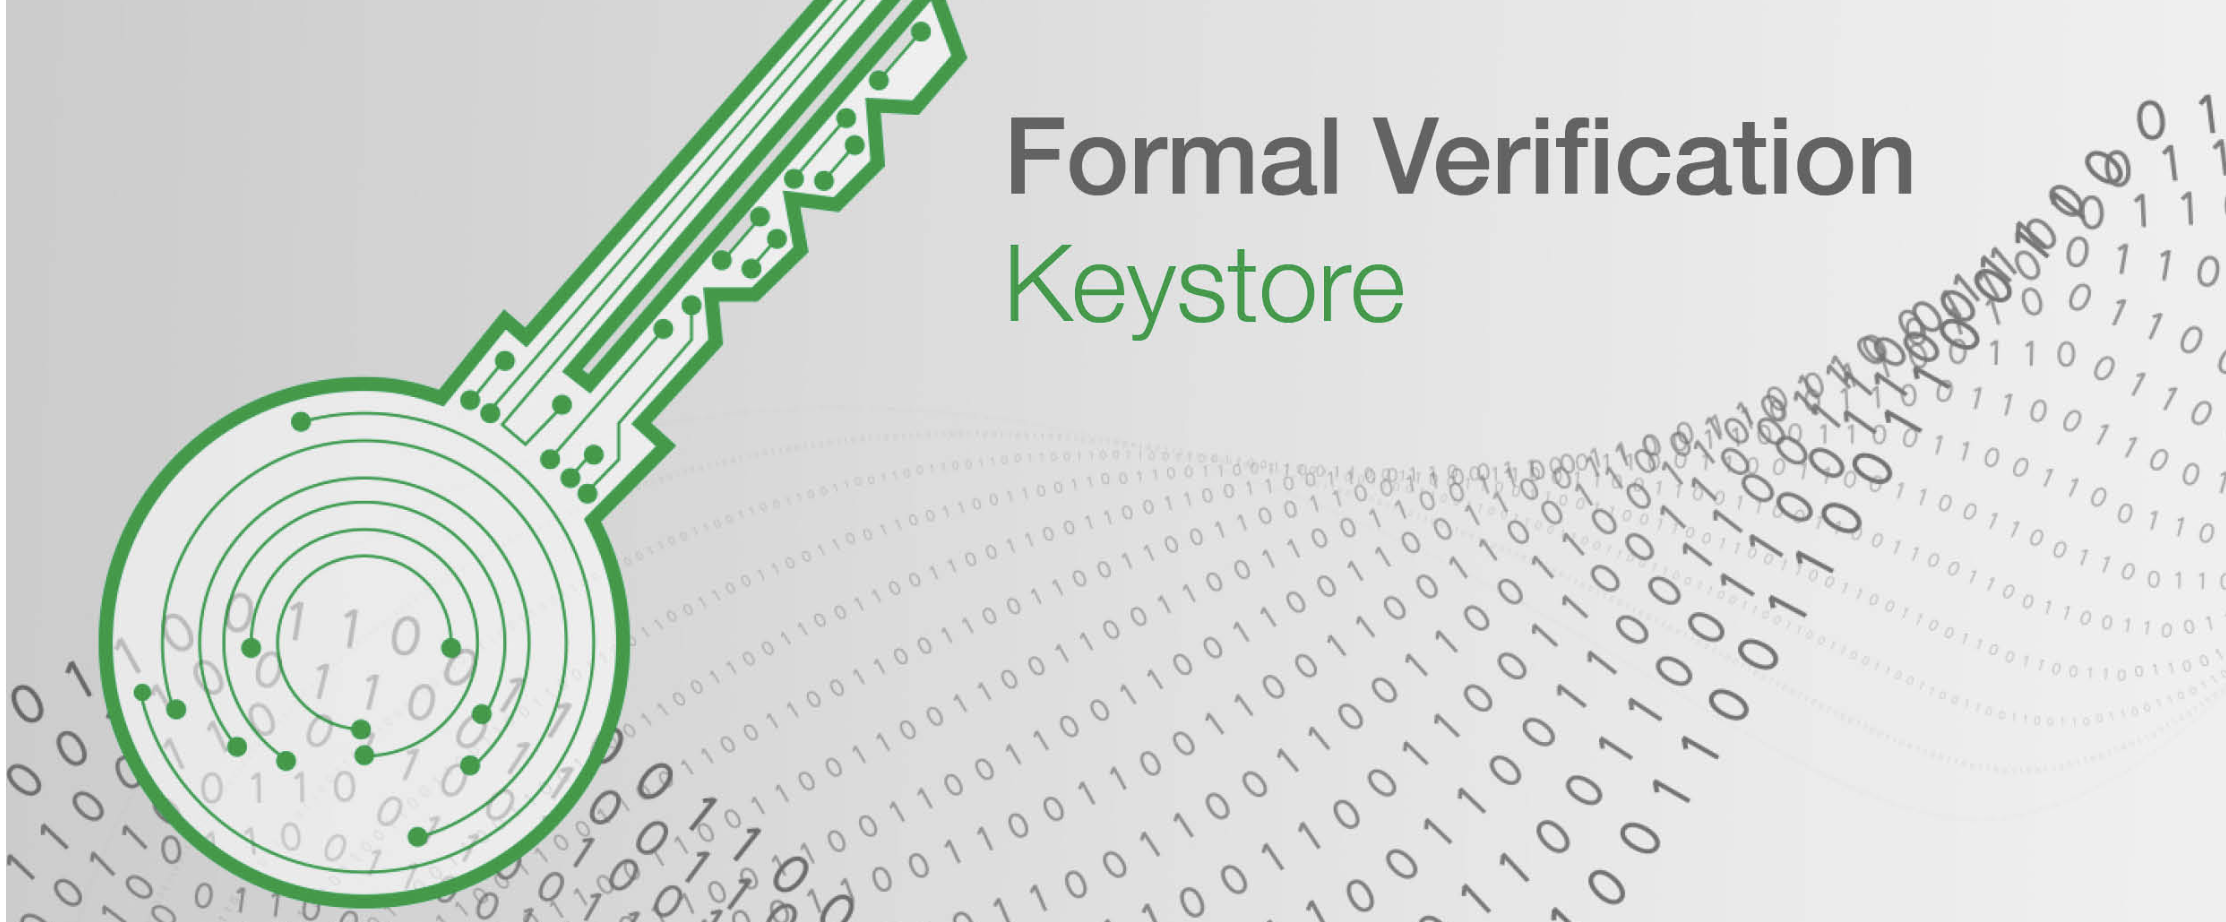 Formal Verification Keystore | Dr. Jaap Boender, Formal Verification Engineer at HENSOLDT Cyber